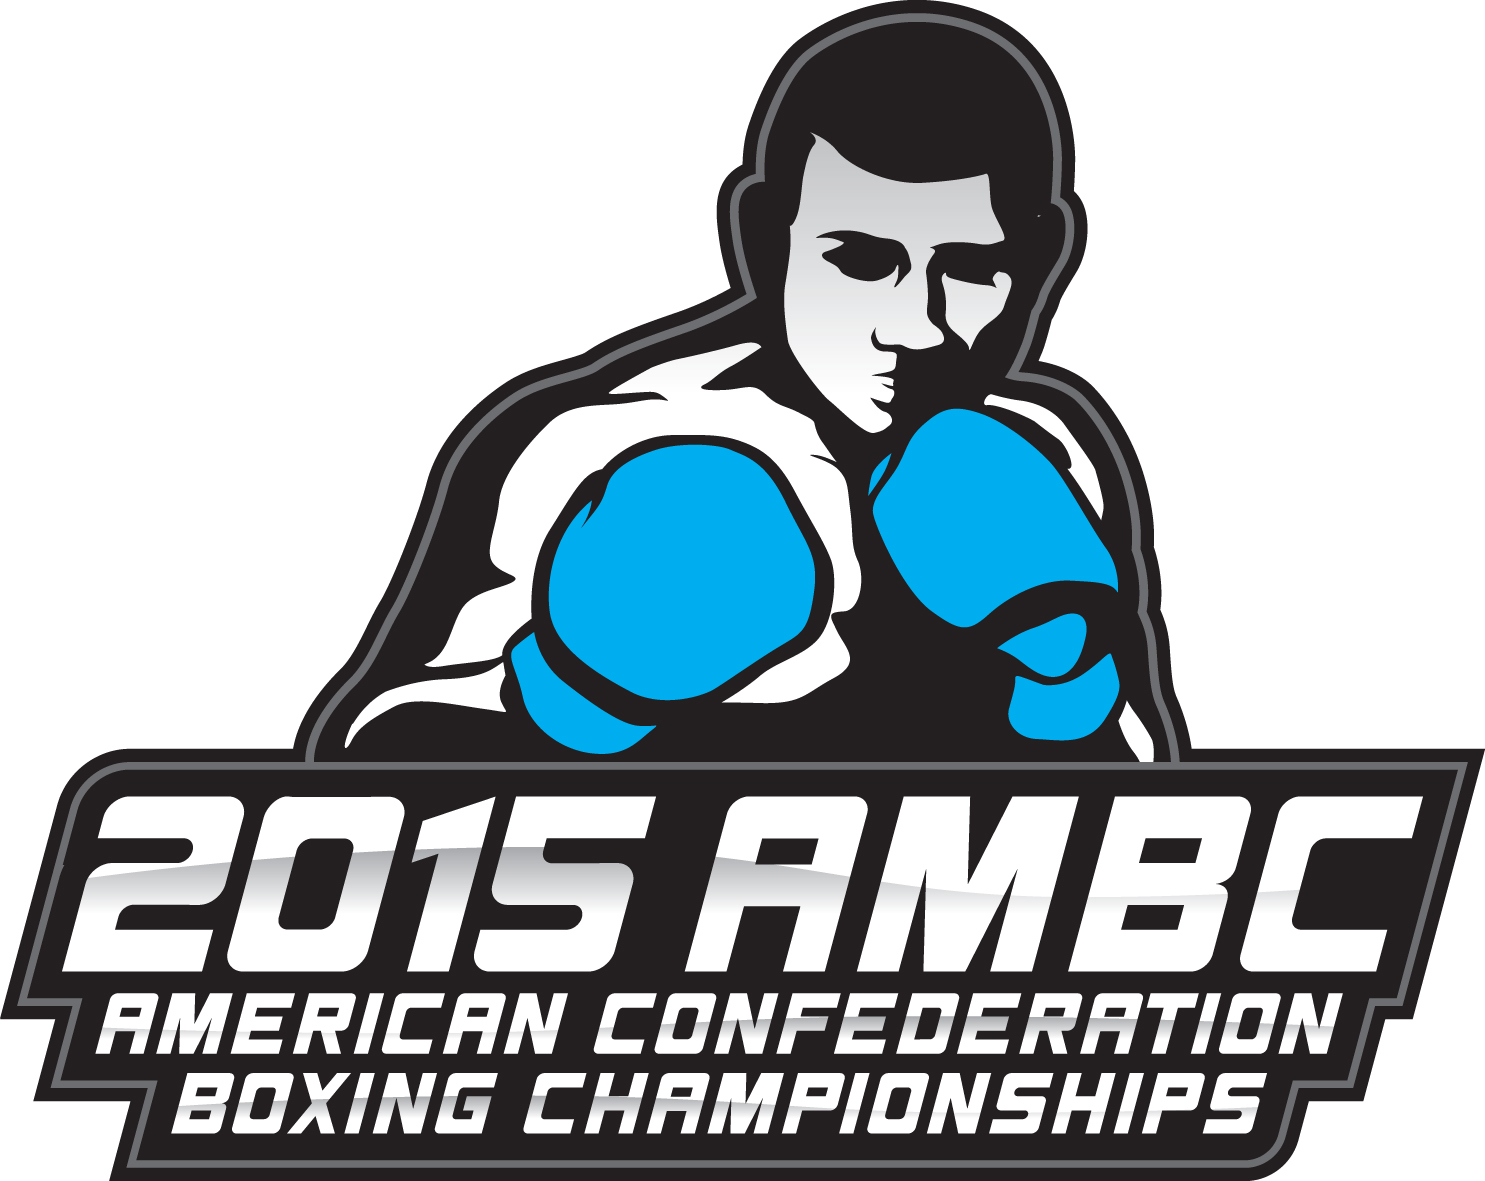 2015 AMBC AMERICAN CONFEDERATION BOXING CHAMPIONSHIPS – IBA